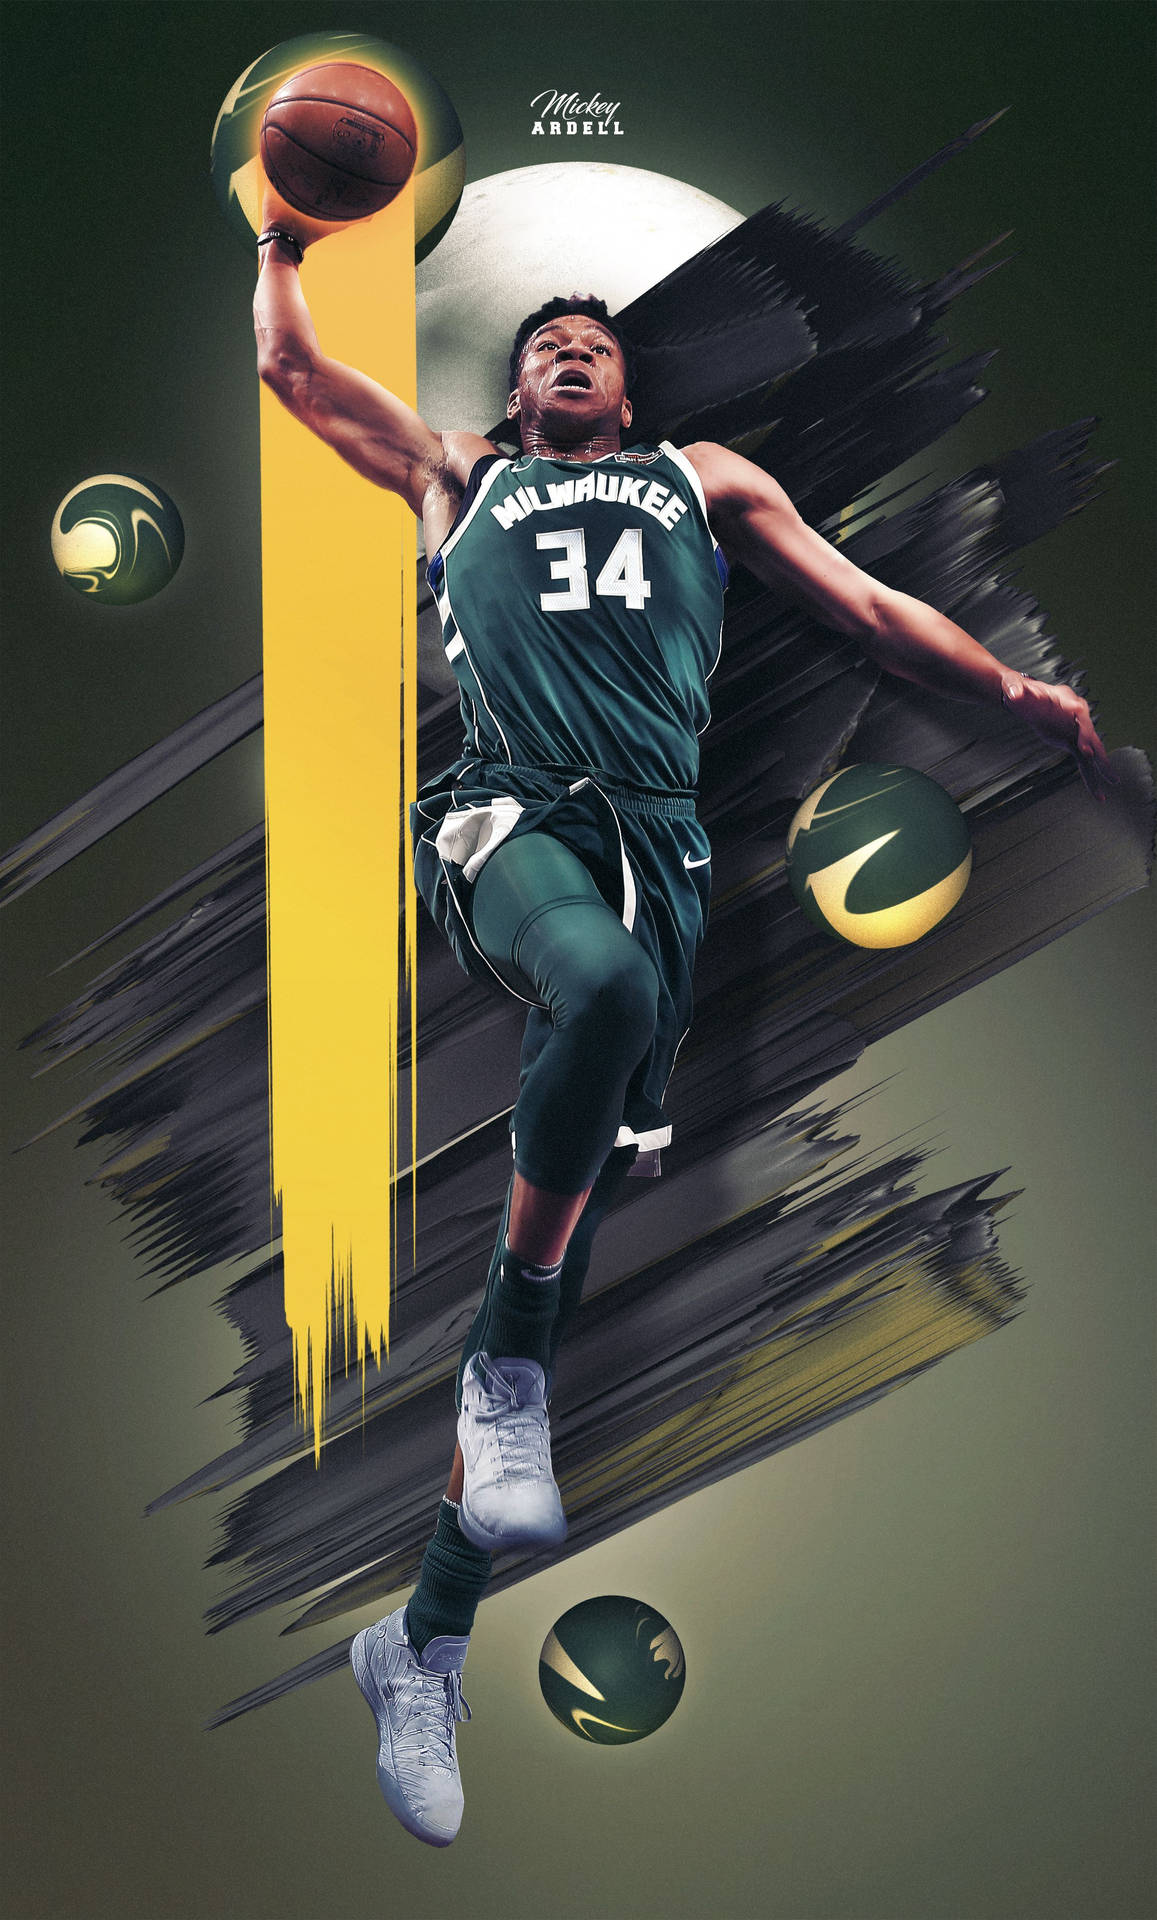 Milwaukee Bucks (NBA) iPhone 6/7/8 Lock Screen Wallpaper